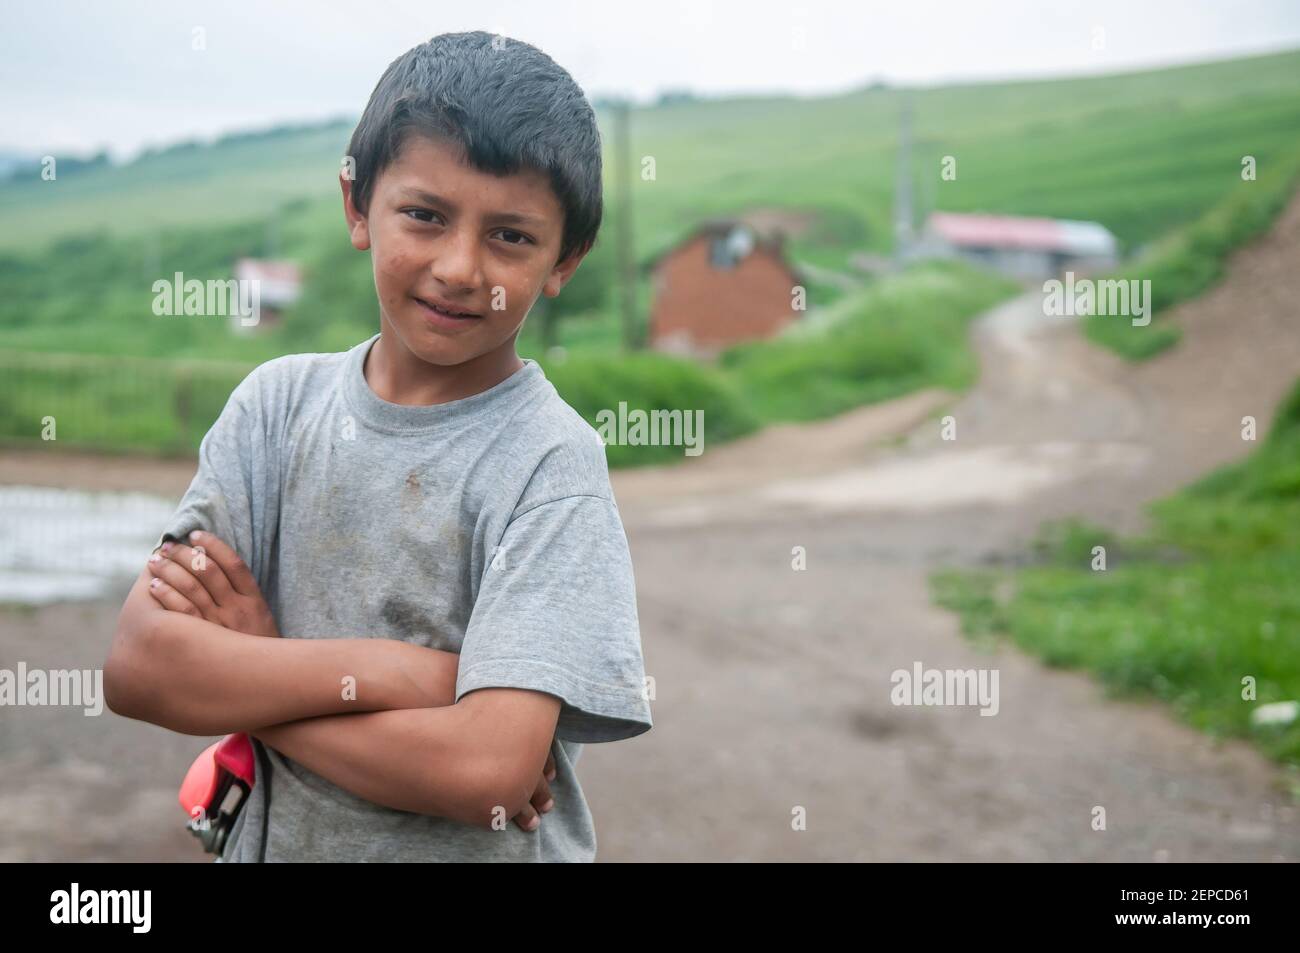 Lomnicka, Slovakia. 05-16-2018. Gypsy boy living in misery and poverty in a abandoned Roma community in the heart of Slovakia. Stock Photo